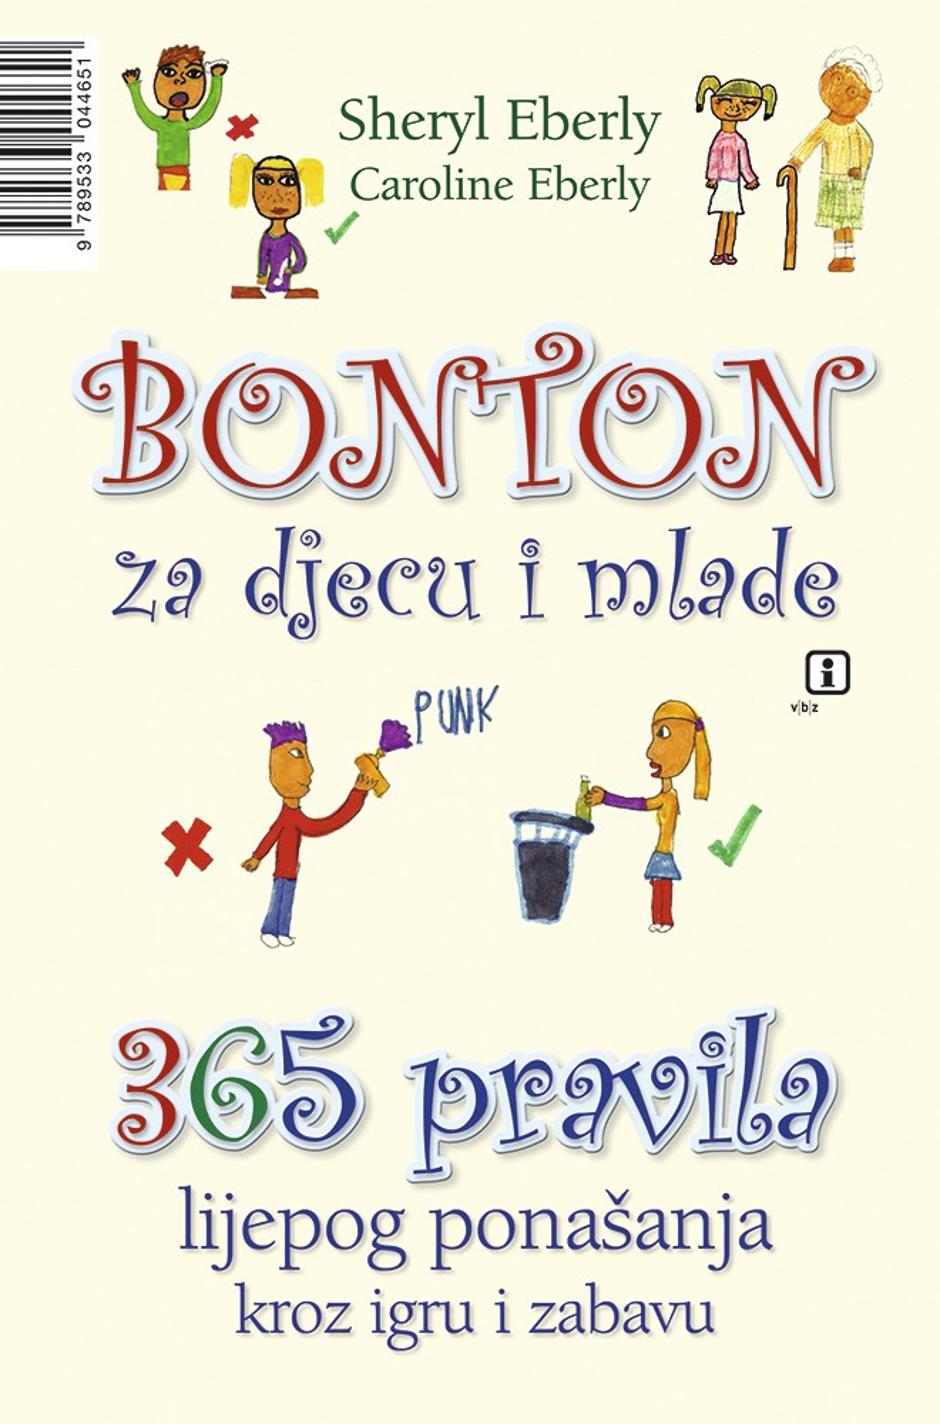 Bonton za djecu i mlade | Author: Promo